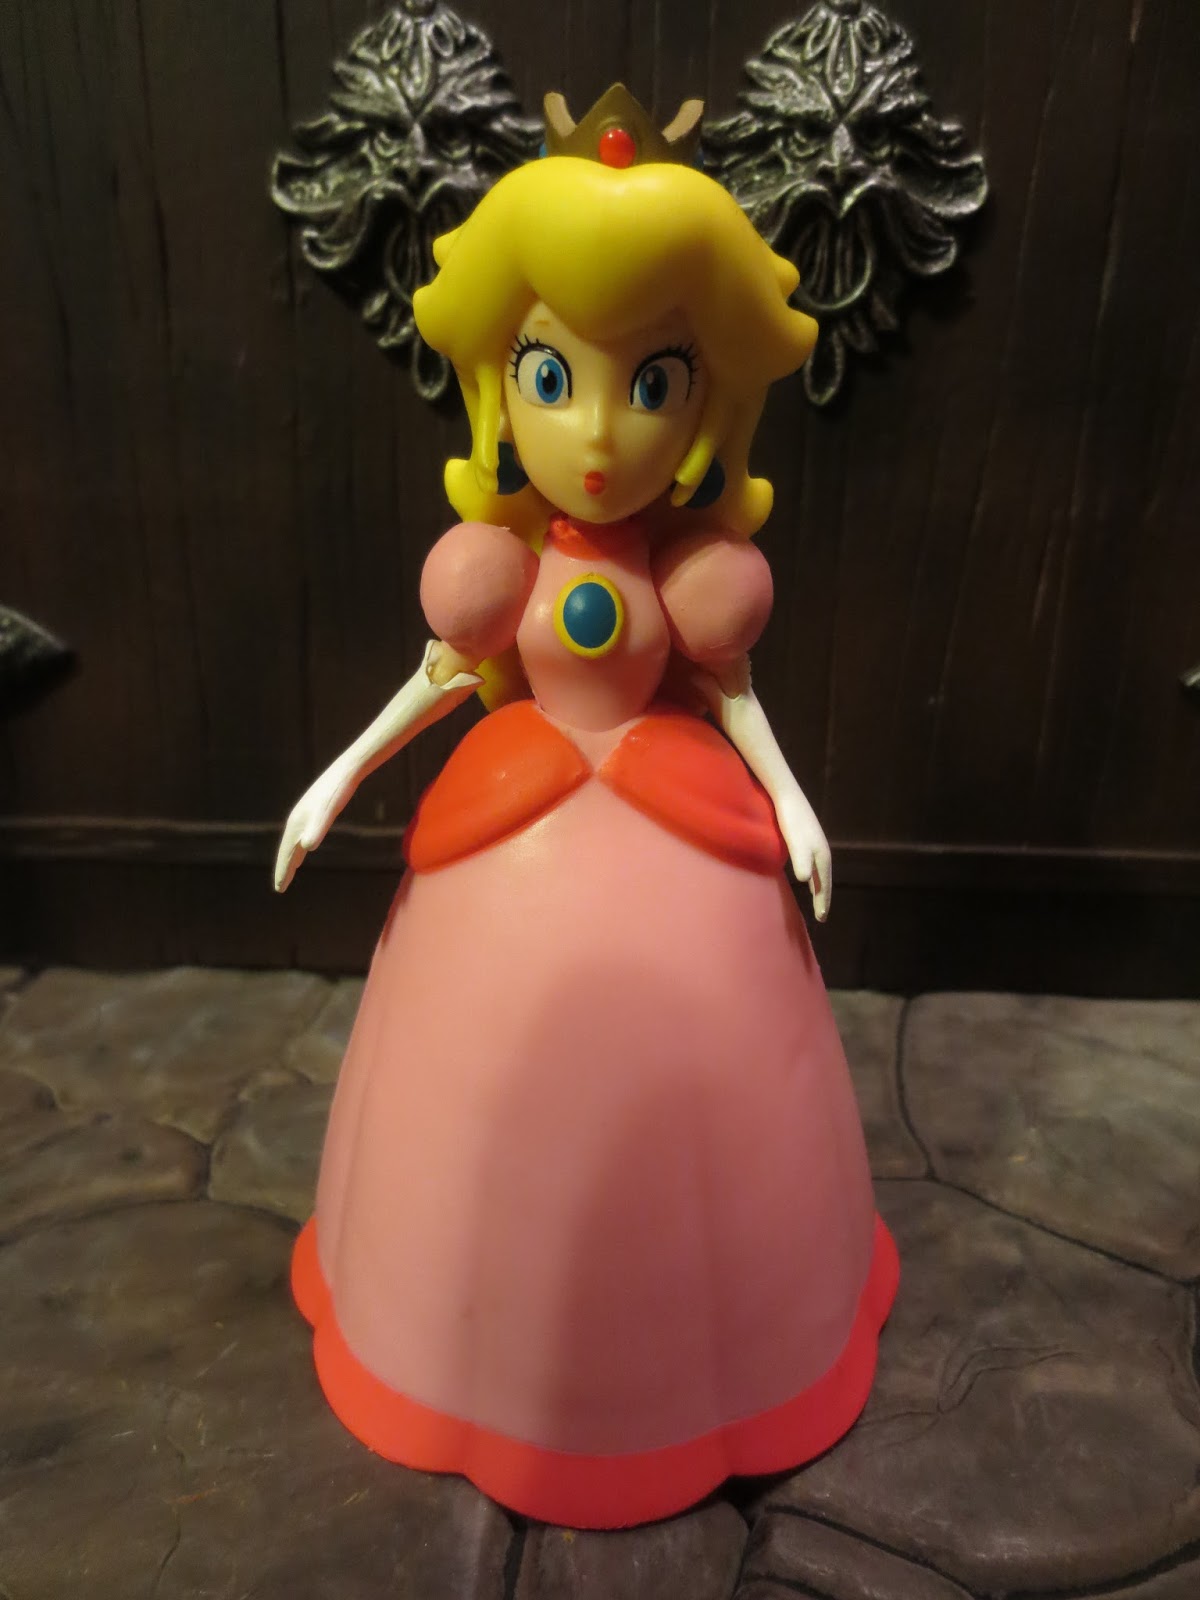 Super Mario Movie 5 inch Princess Peach Action Figure with Umbrella  Accessory